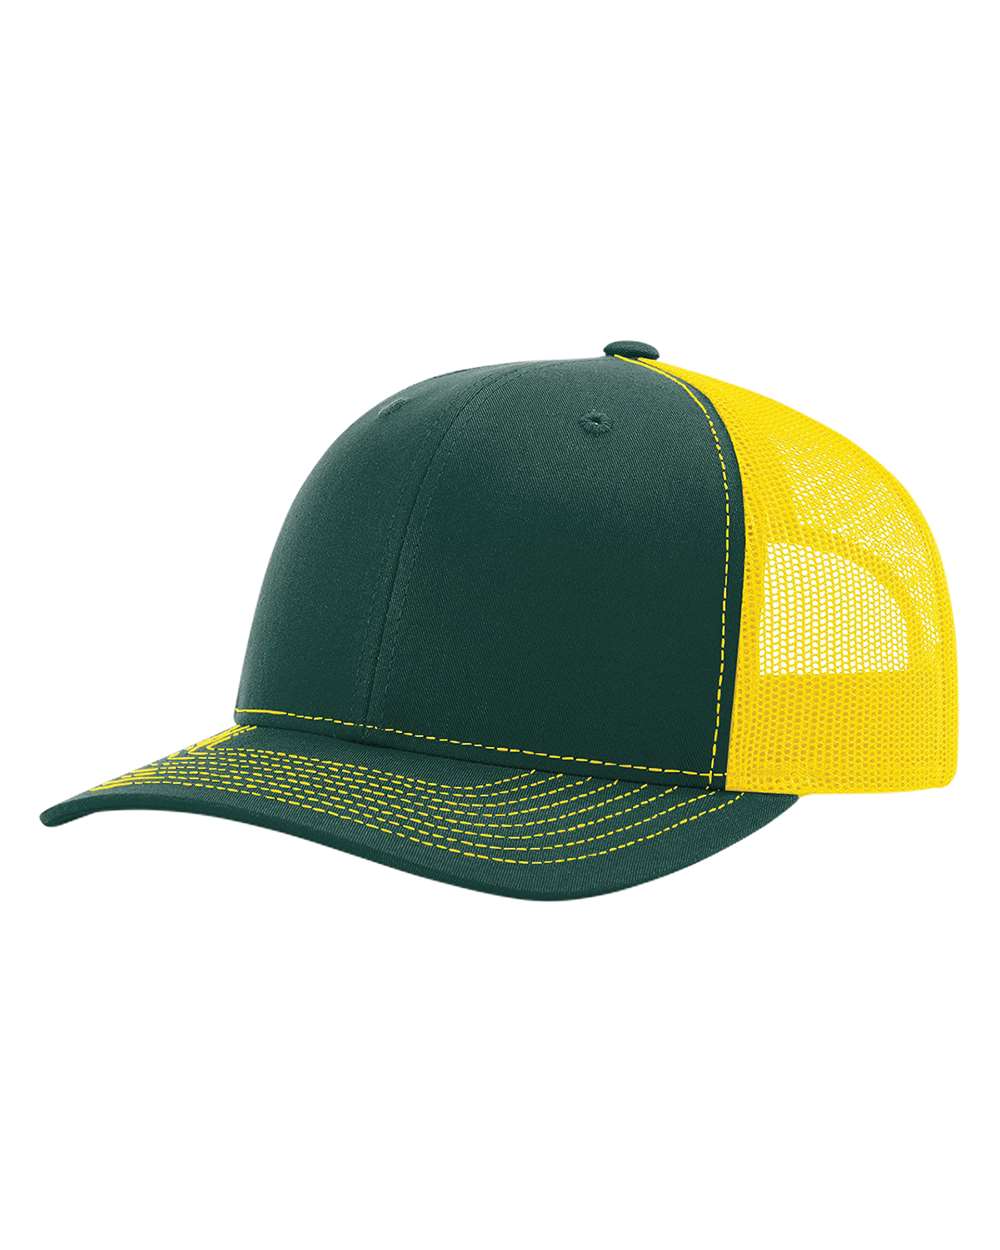 richardson cap dark green yellow